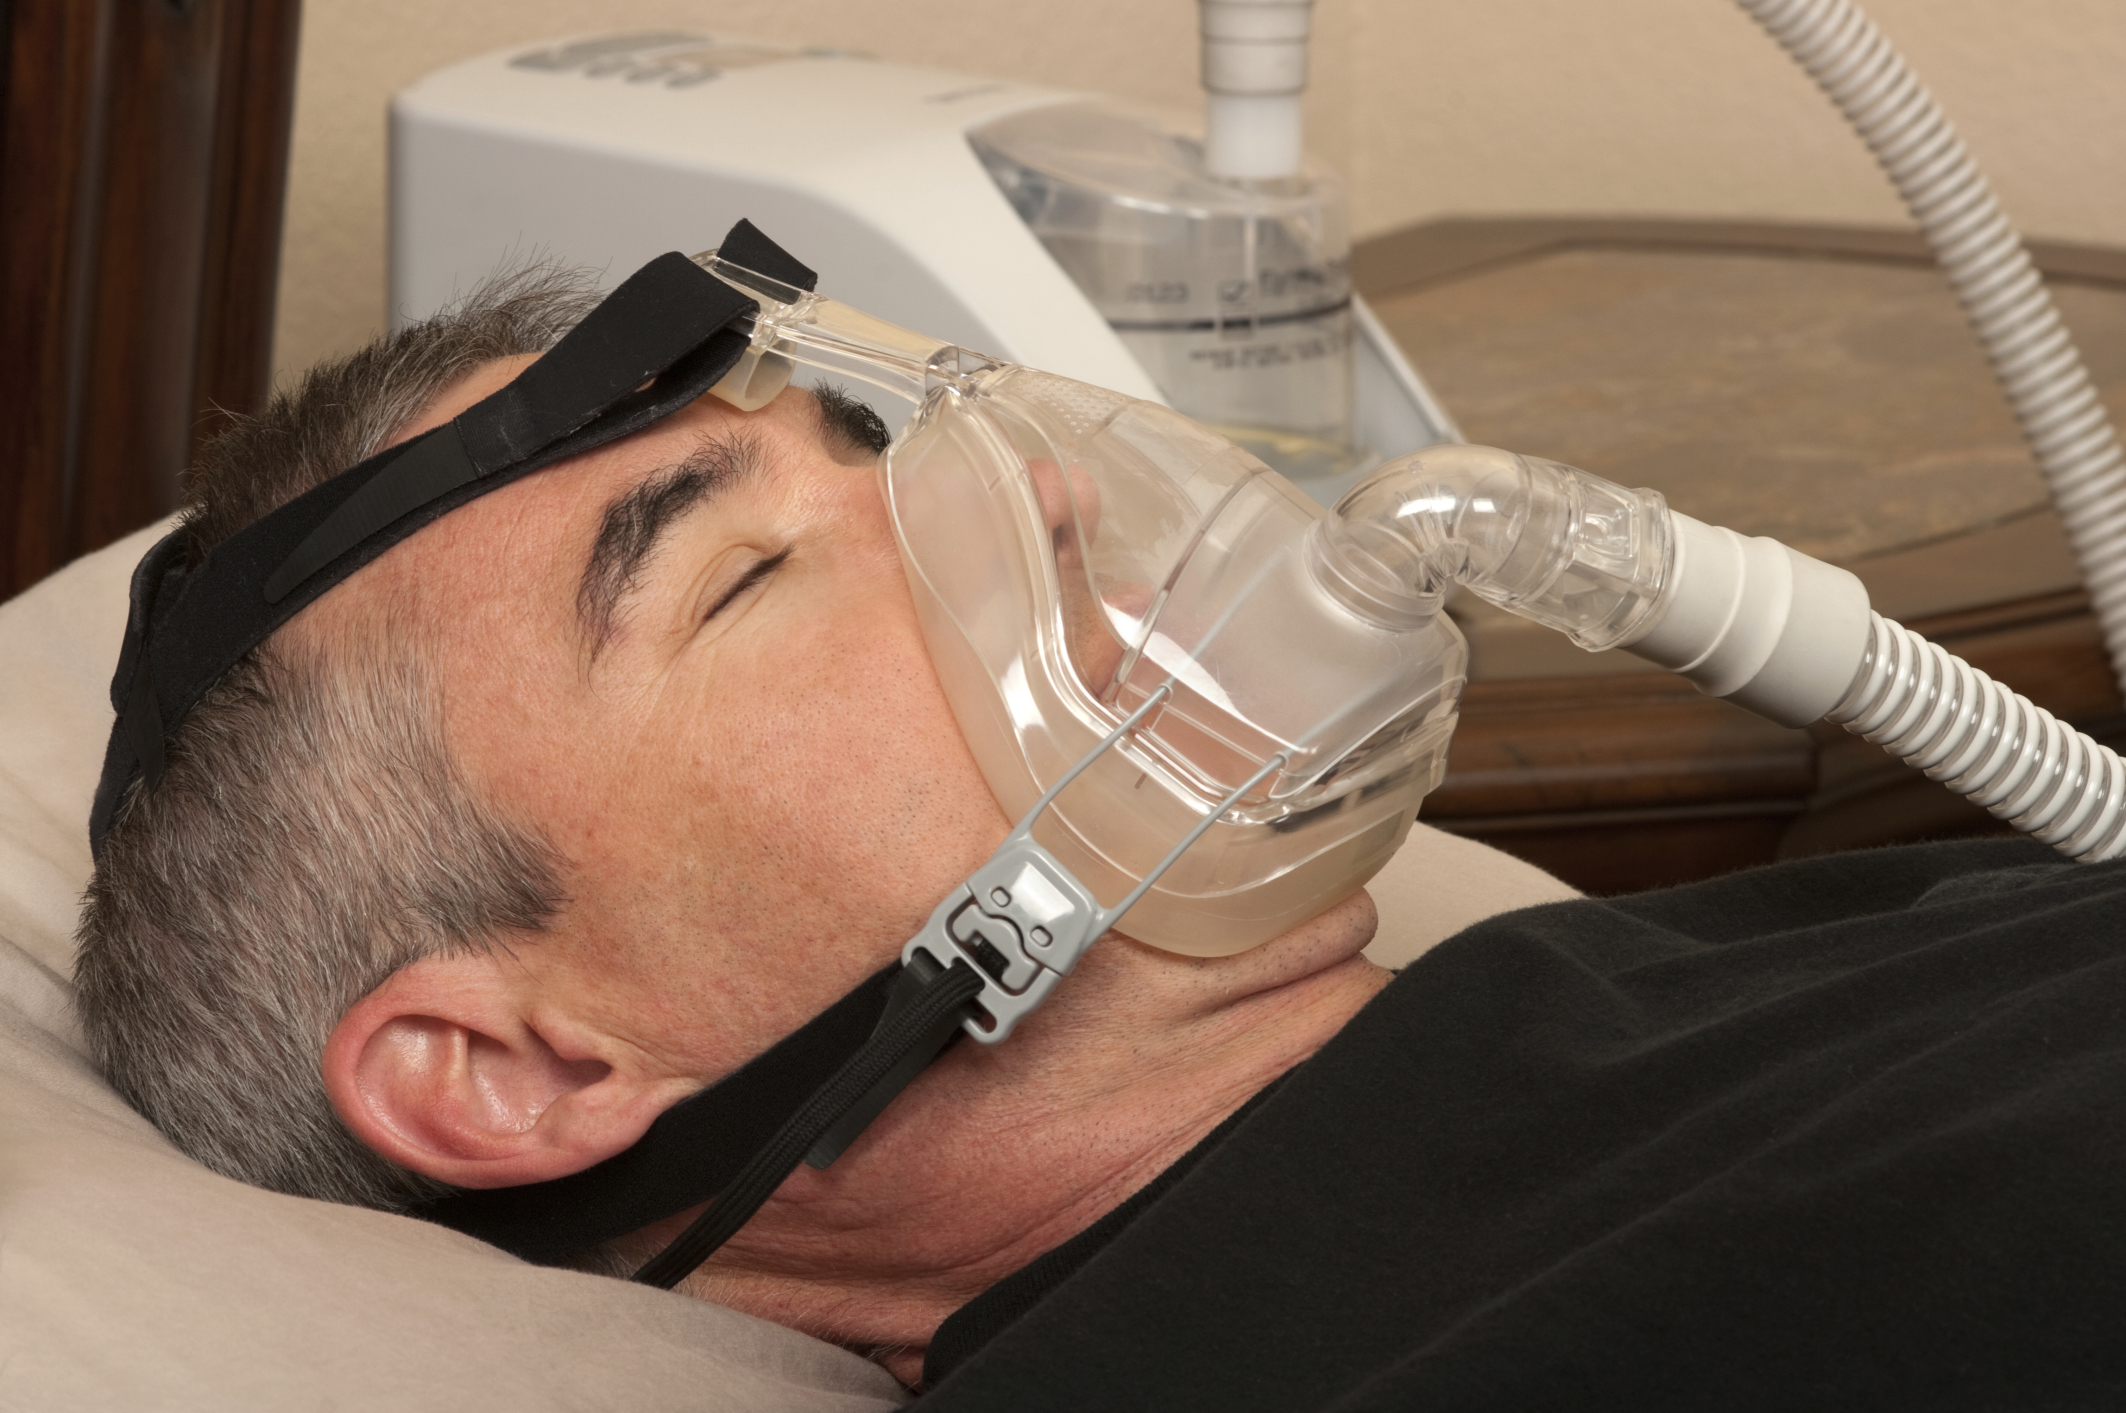 sleep-apnea-treatment-by-cpap-device-can-lower-diabetes-risk